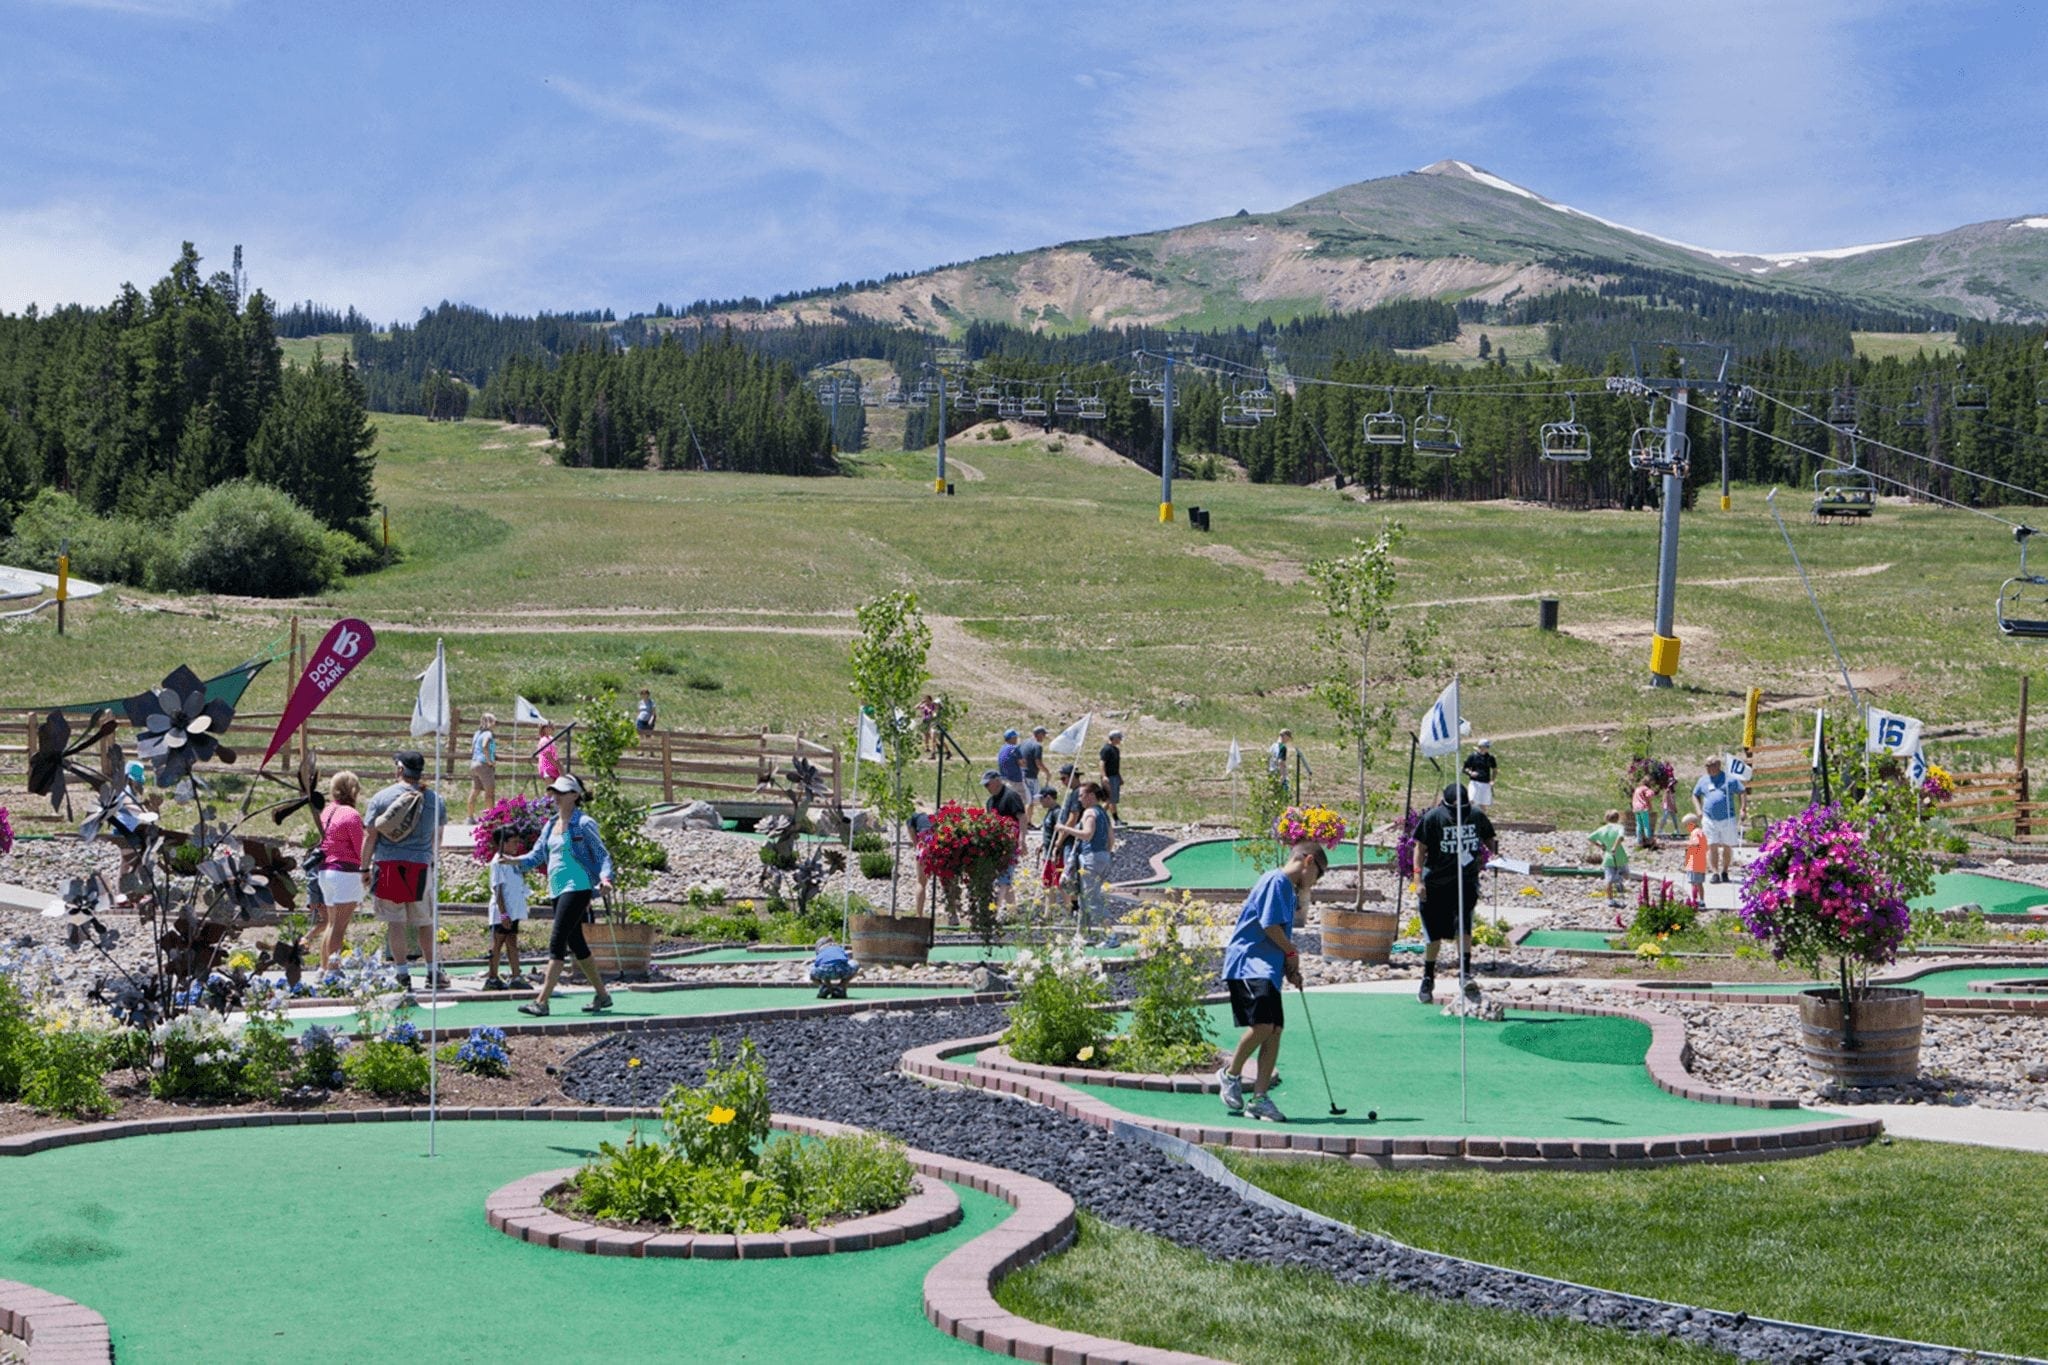 Mini golfing at Breckenridge Ski Resort's Epic Discovery in the summer